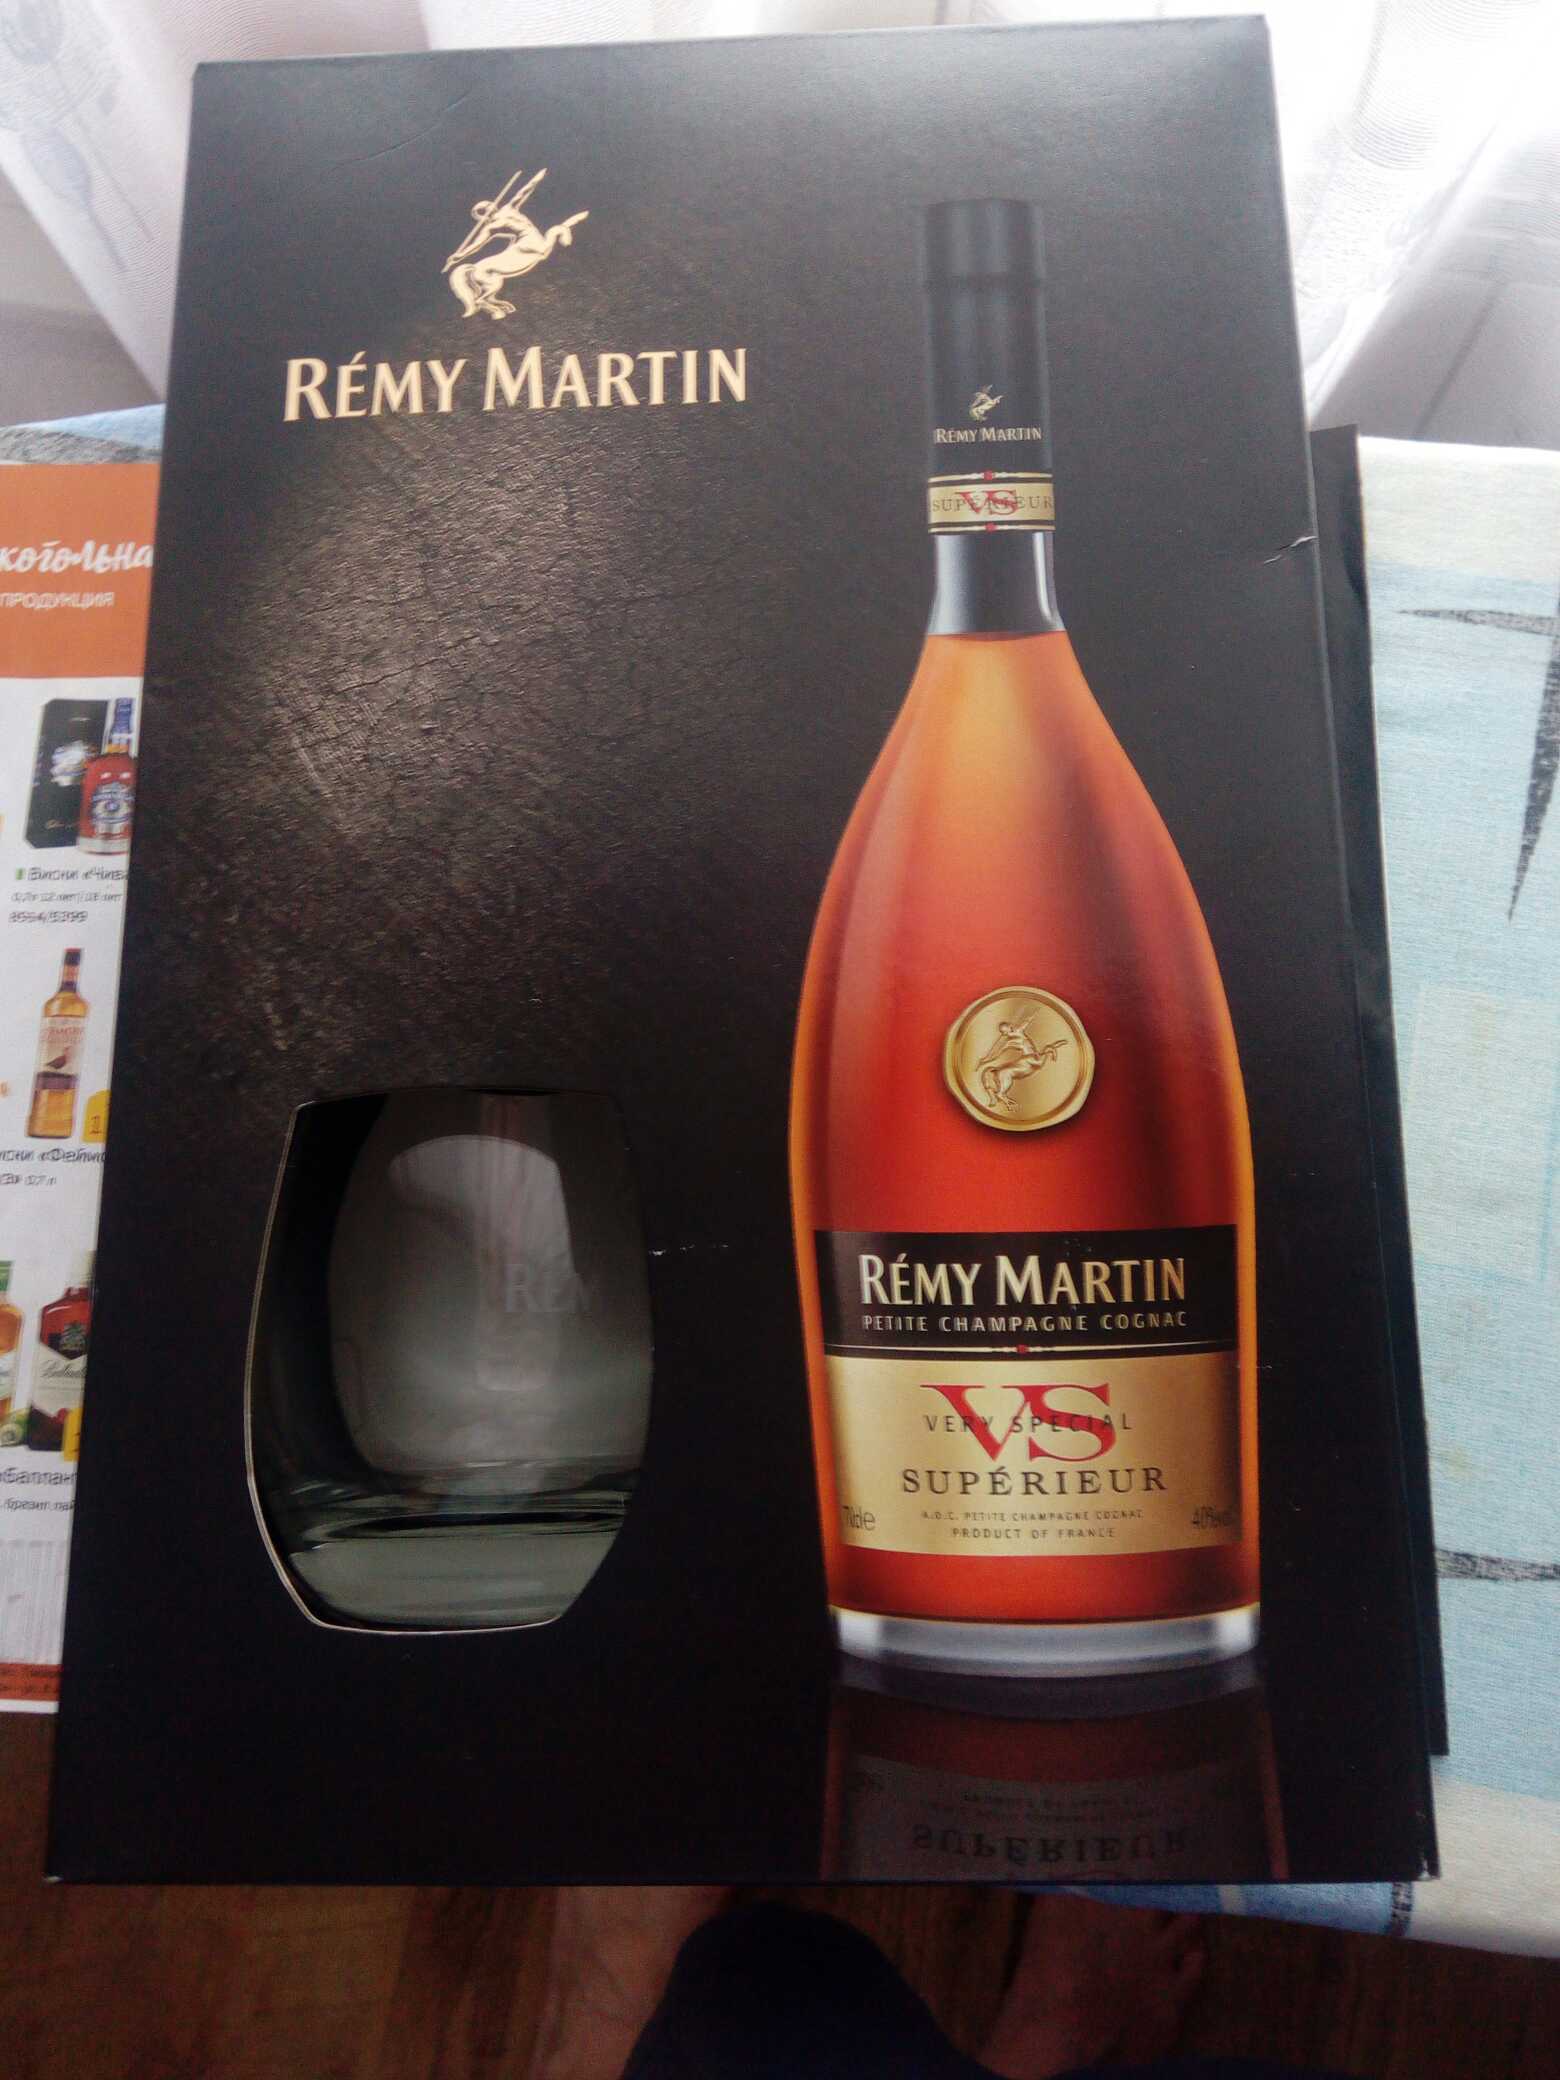 Remy martin (реми мартин) vsop: обзор и особенности коньяка